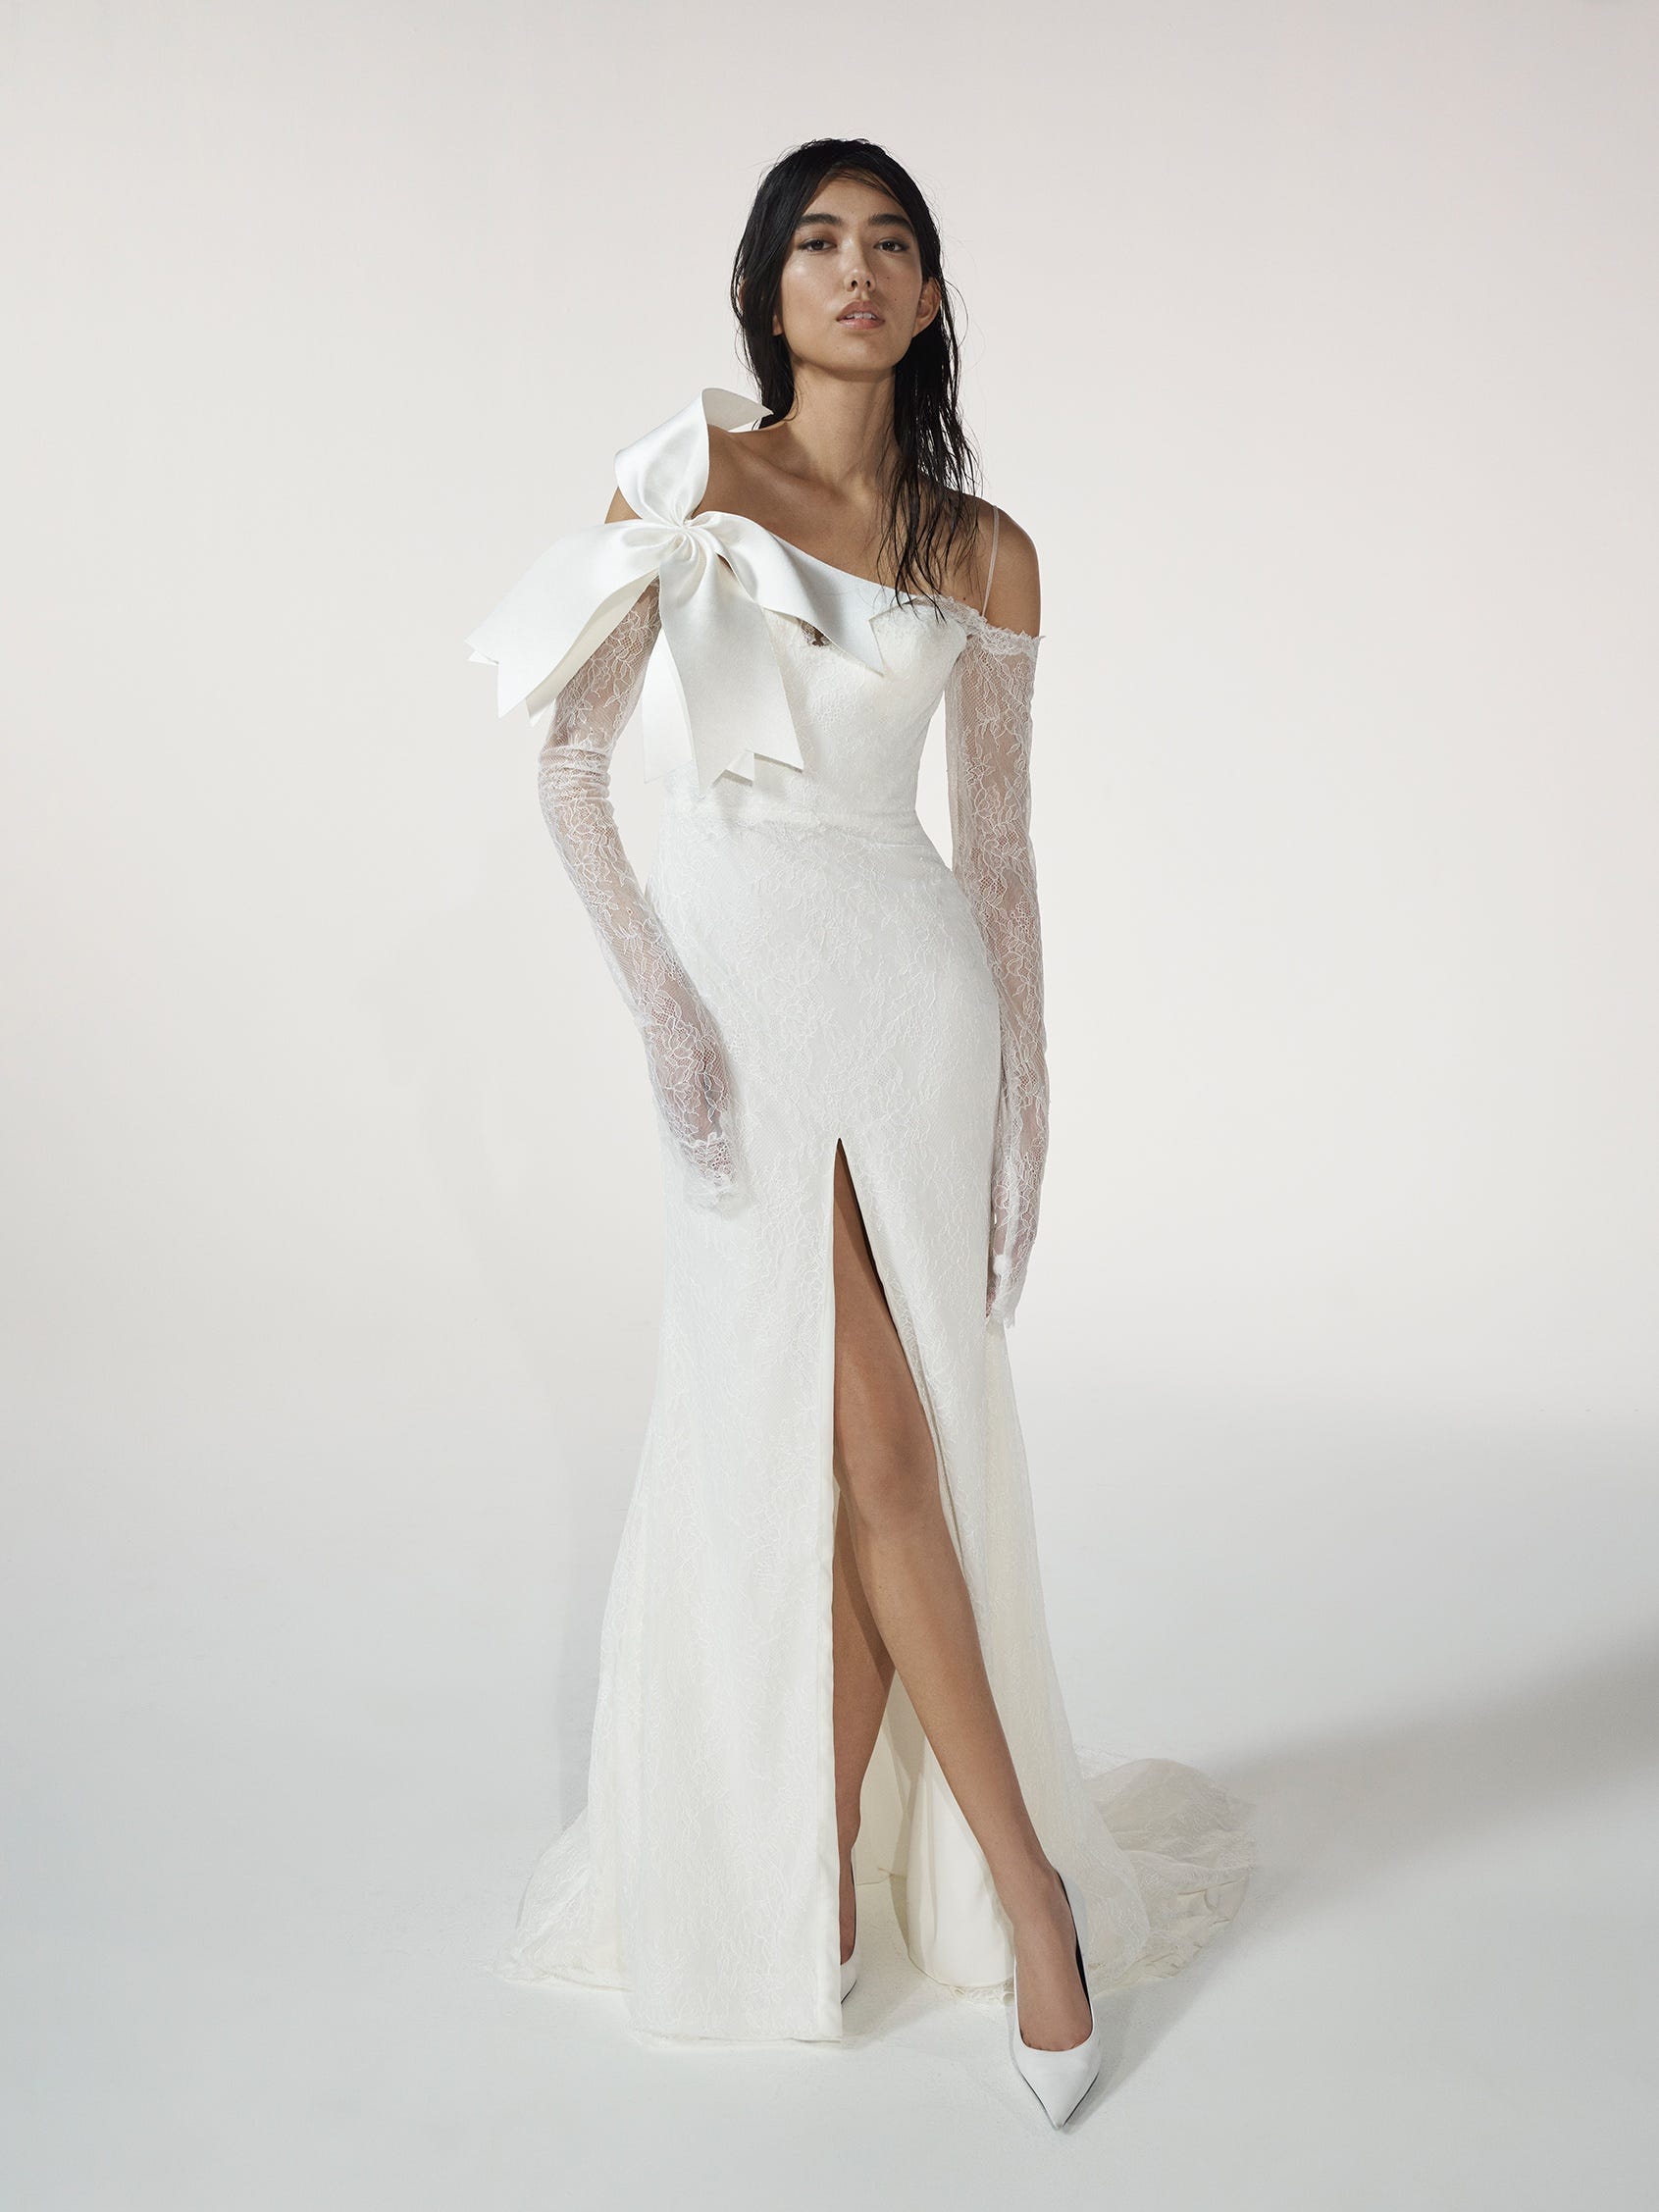 MAUD Vera Wang wedding dress collection2022: Paris Boutique